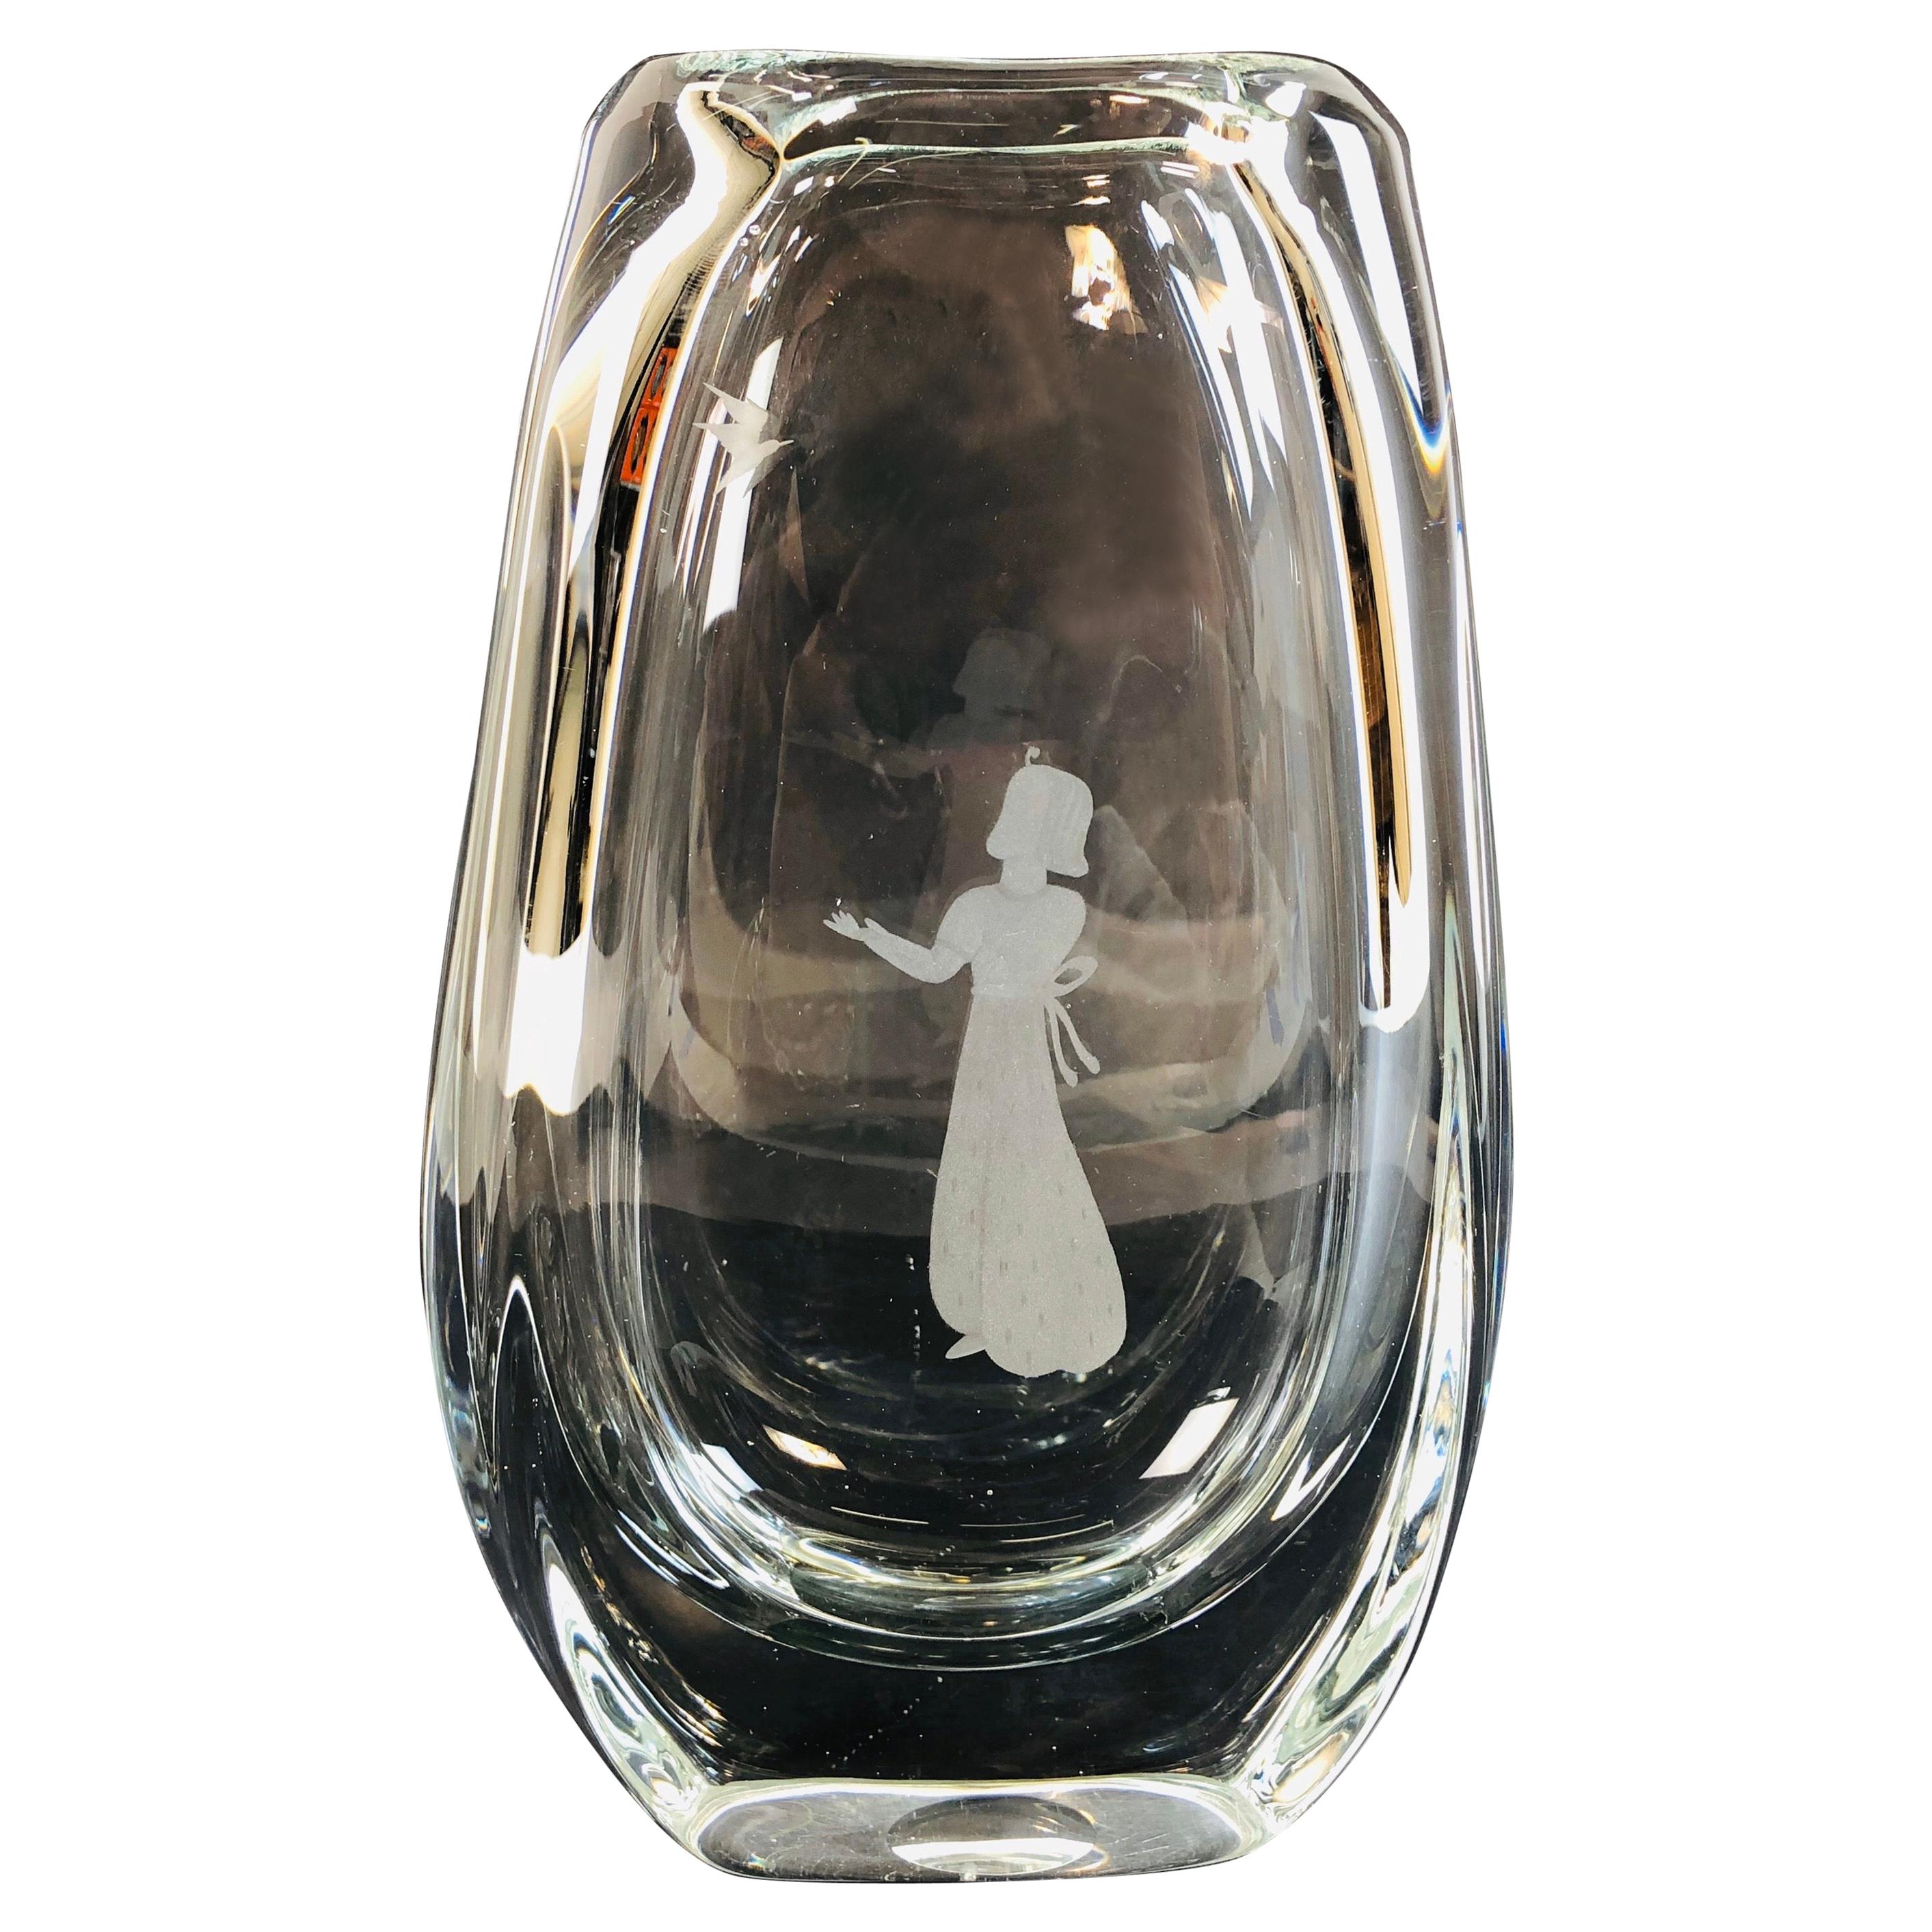 Vintage Scandinavian Etched Glass Vase with Girl For Sale at 1stDibs